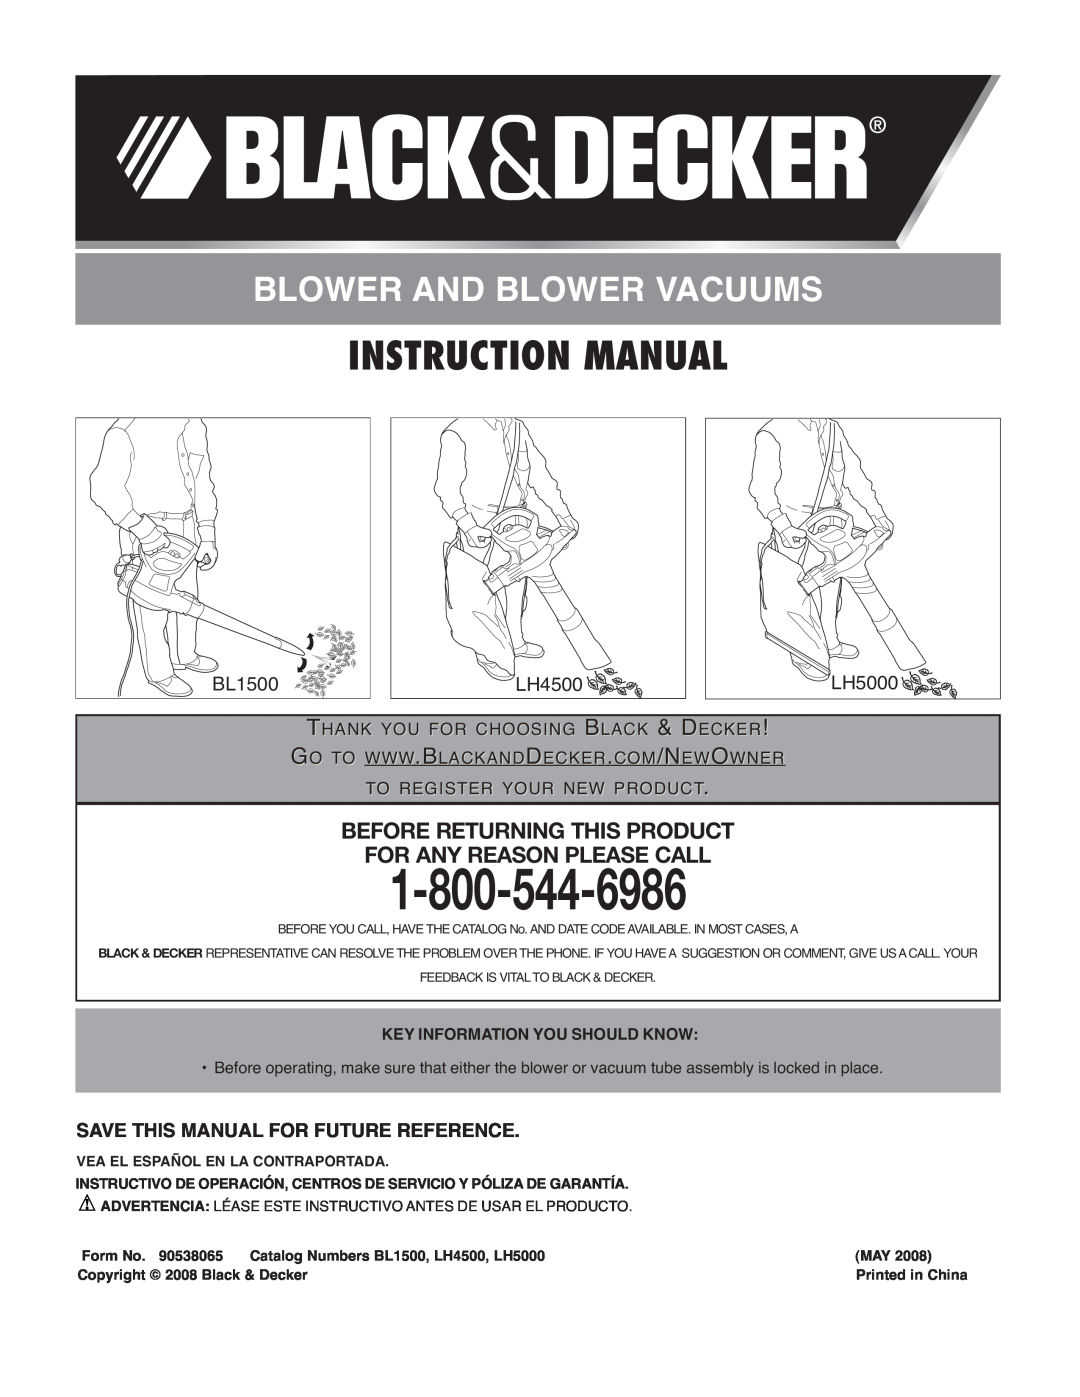 Black & Decker LH4500 instruction manual Save This Manual For Future Reference, Vea El Español En La Contraportada, BL1500 